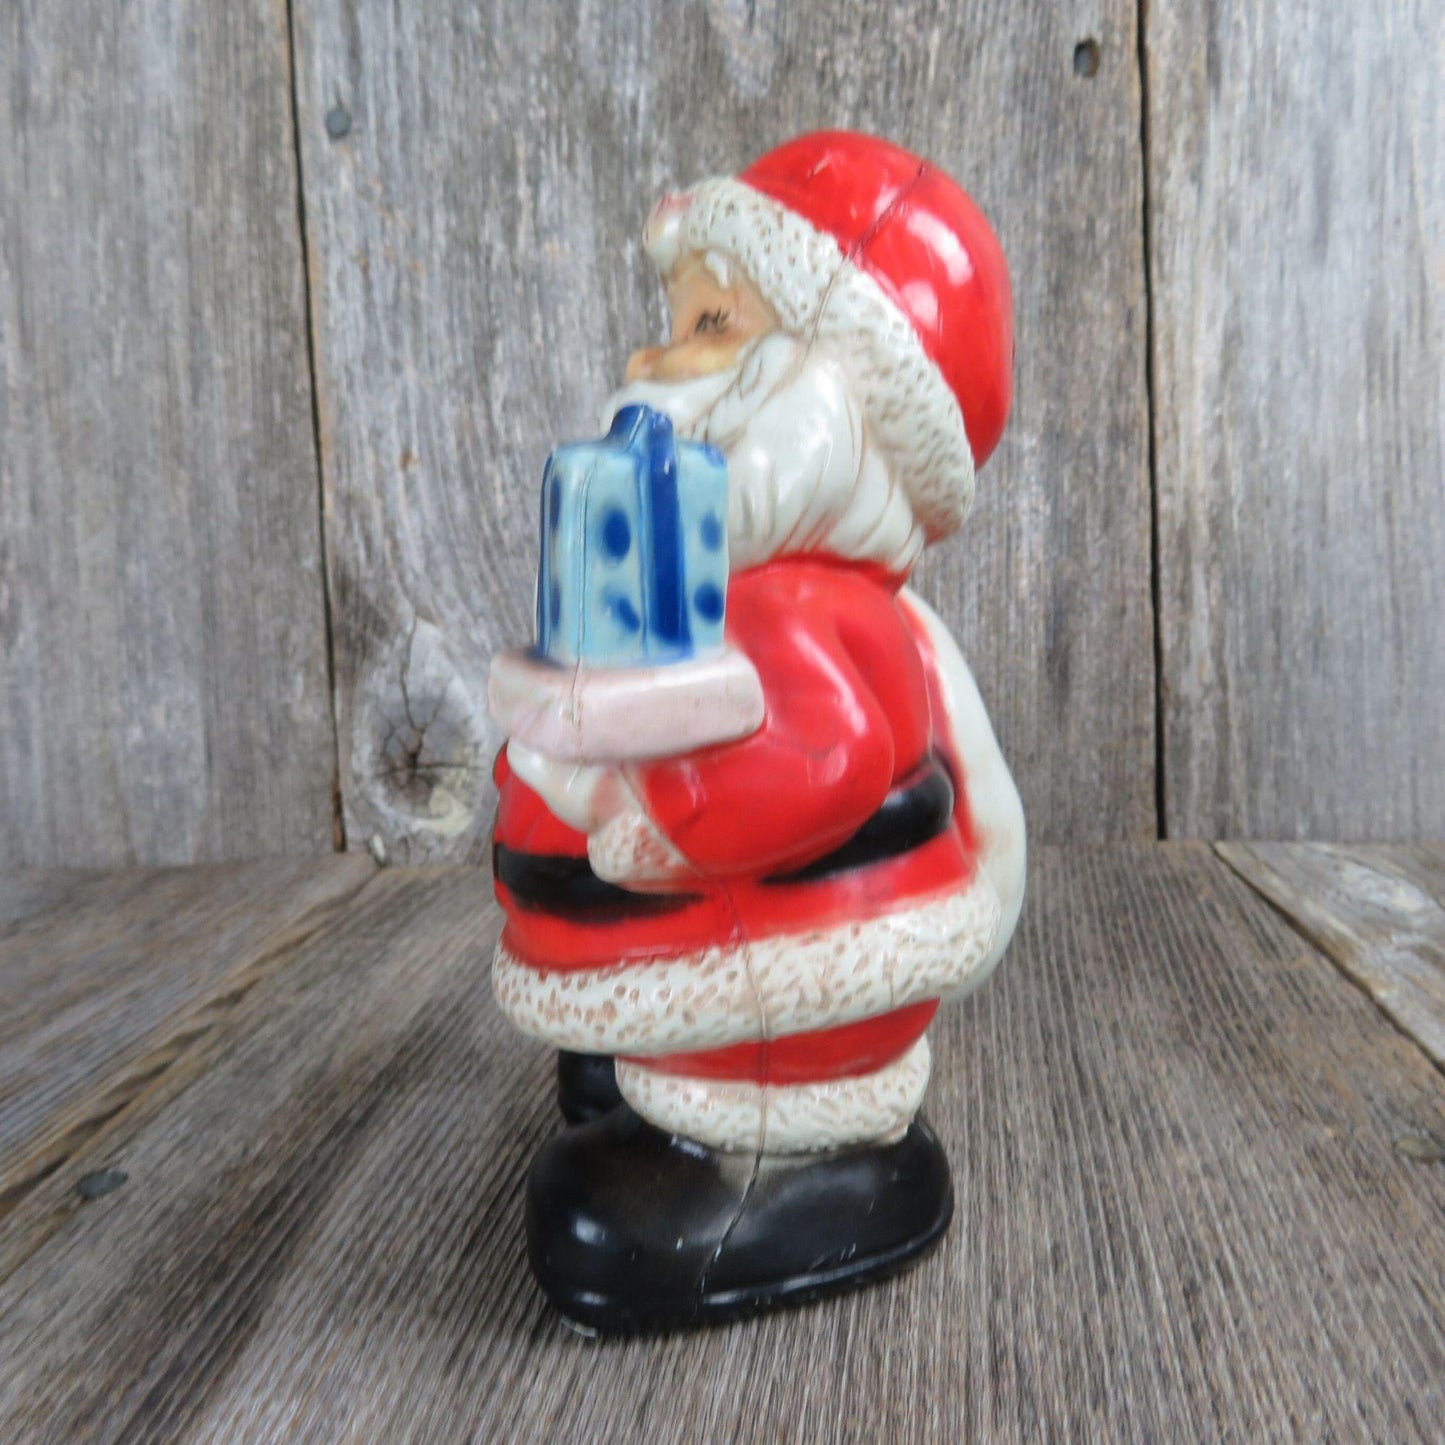 Vintage Santa Claus Bank Plastic Christmas Hong Kong Figurine Decoration Holiday